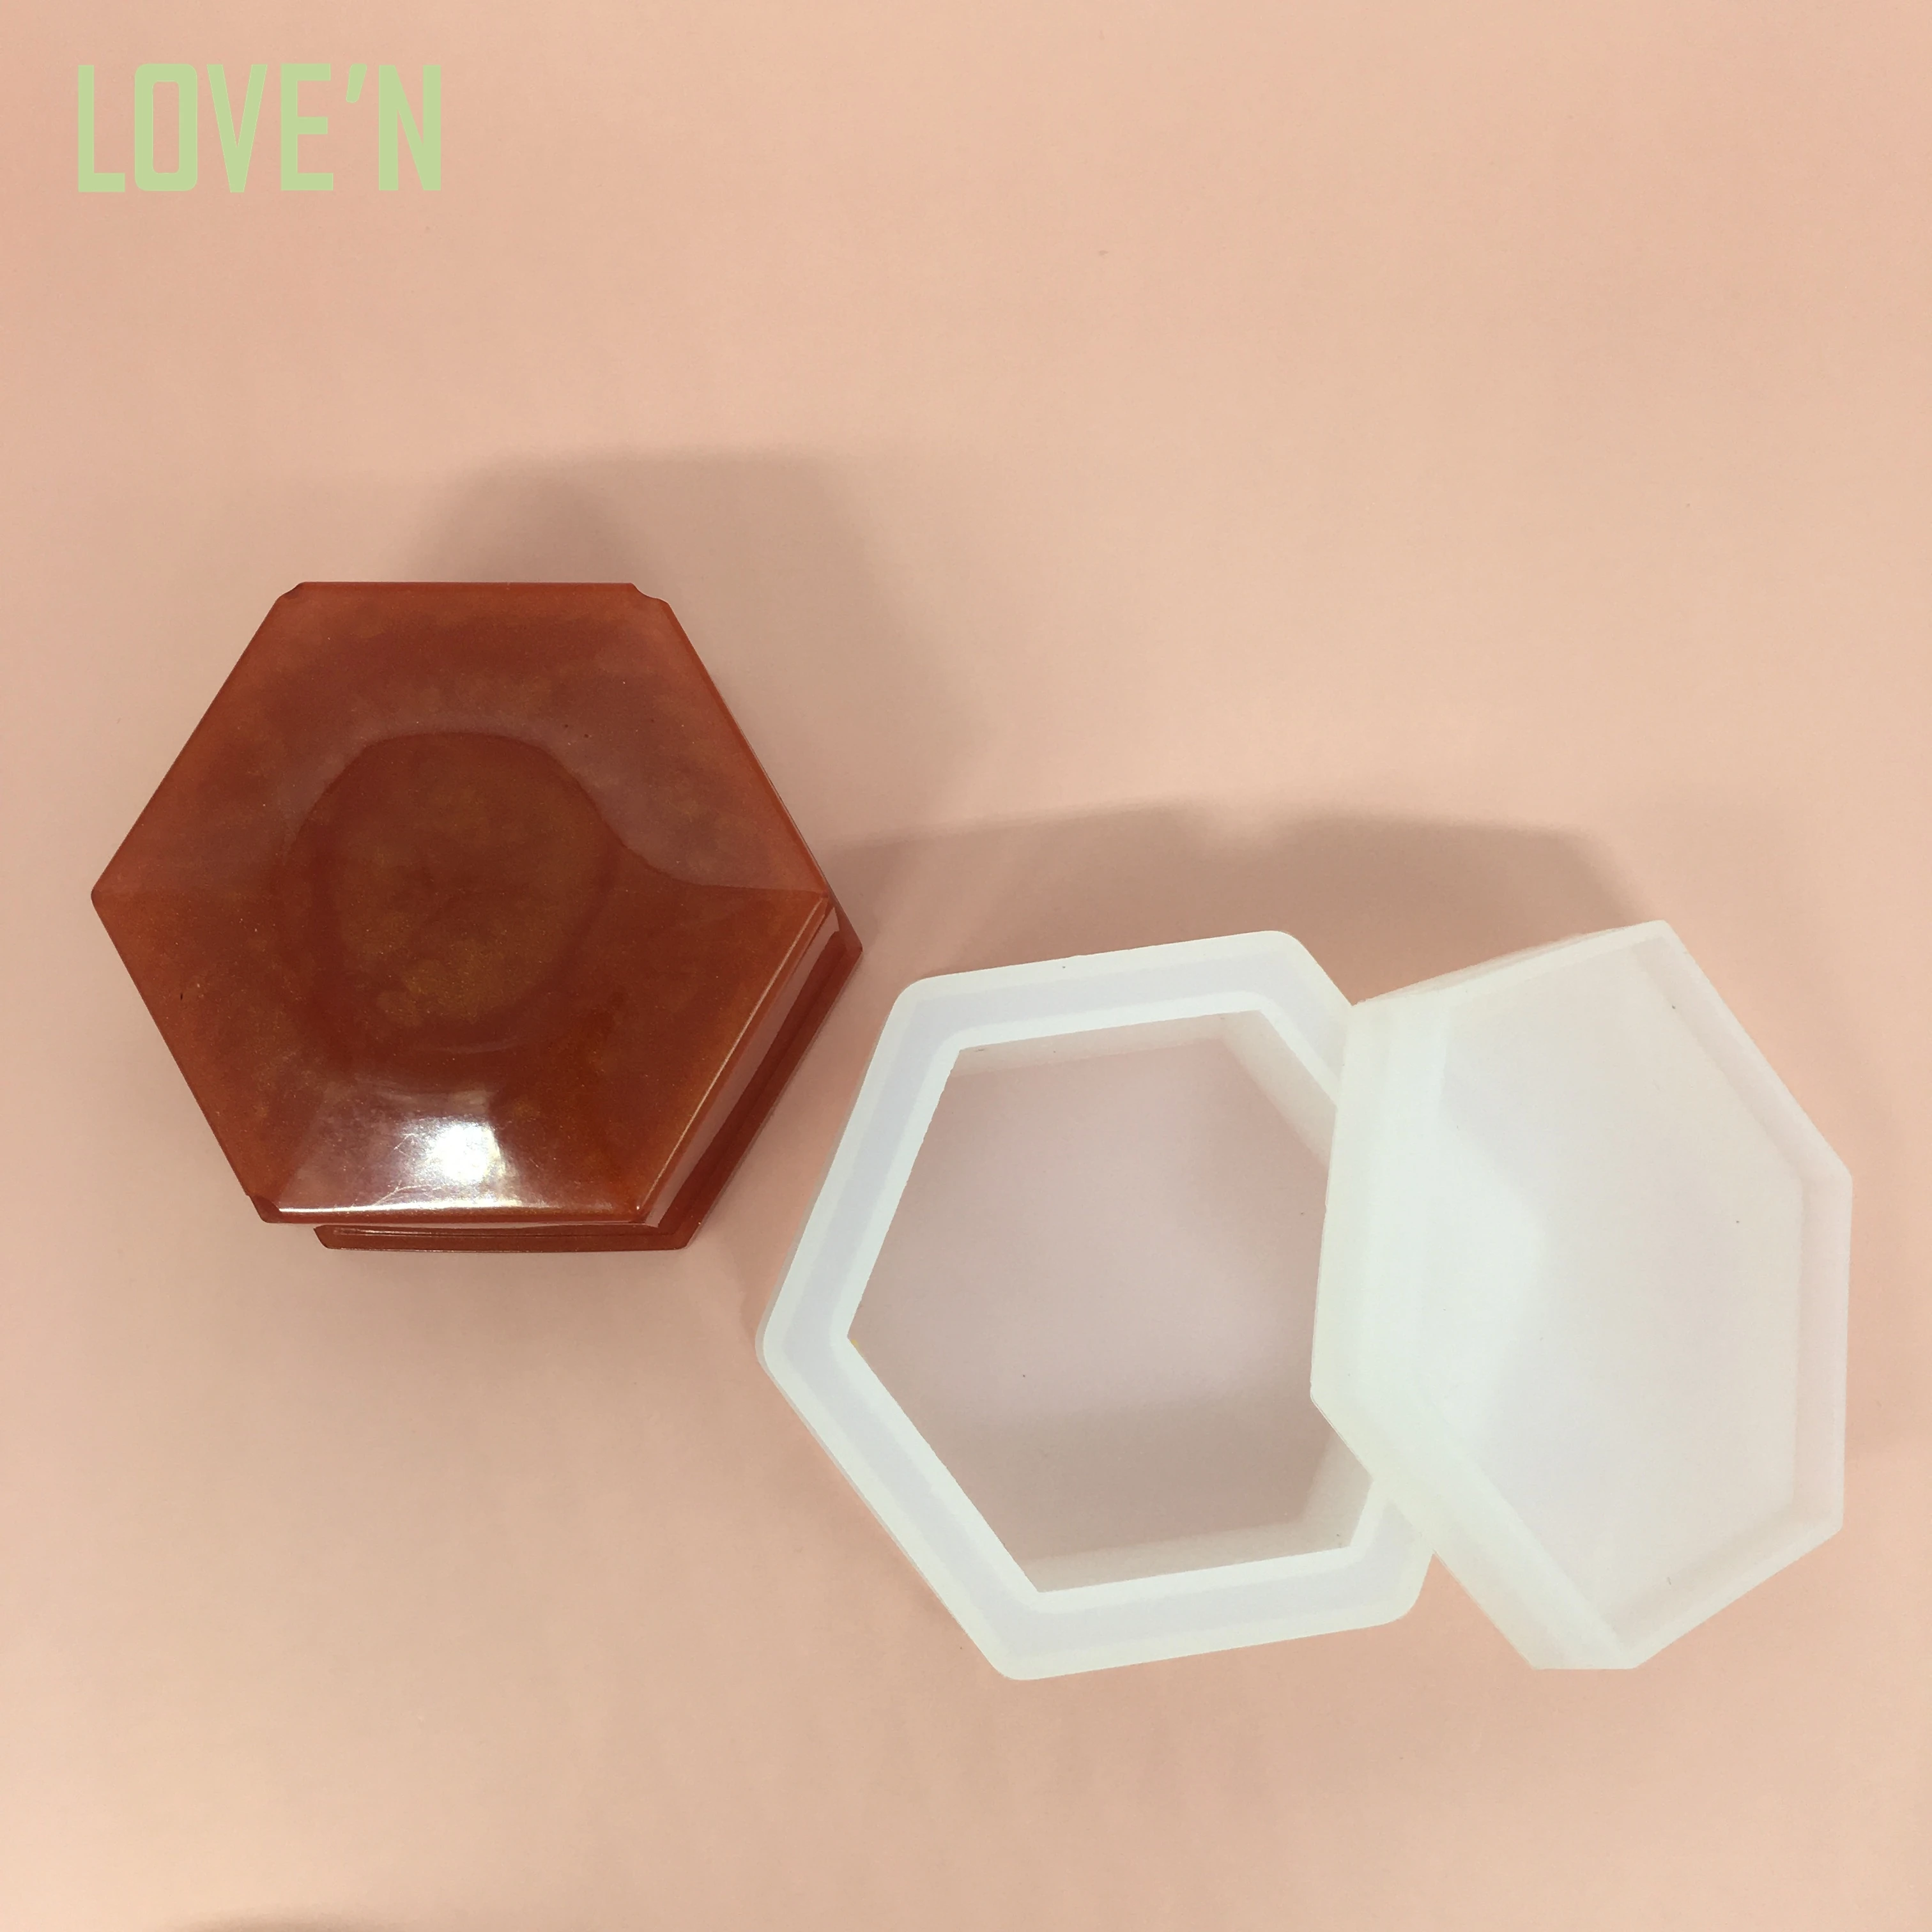 

LOVE'N OEM LV060B Trinket hexagonal Storage Jewelry Box Resin silicone Mold For Diy Handmade Craft wedding present Making